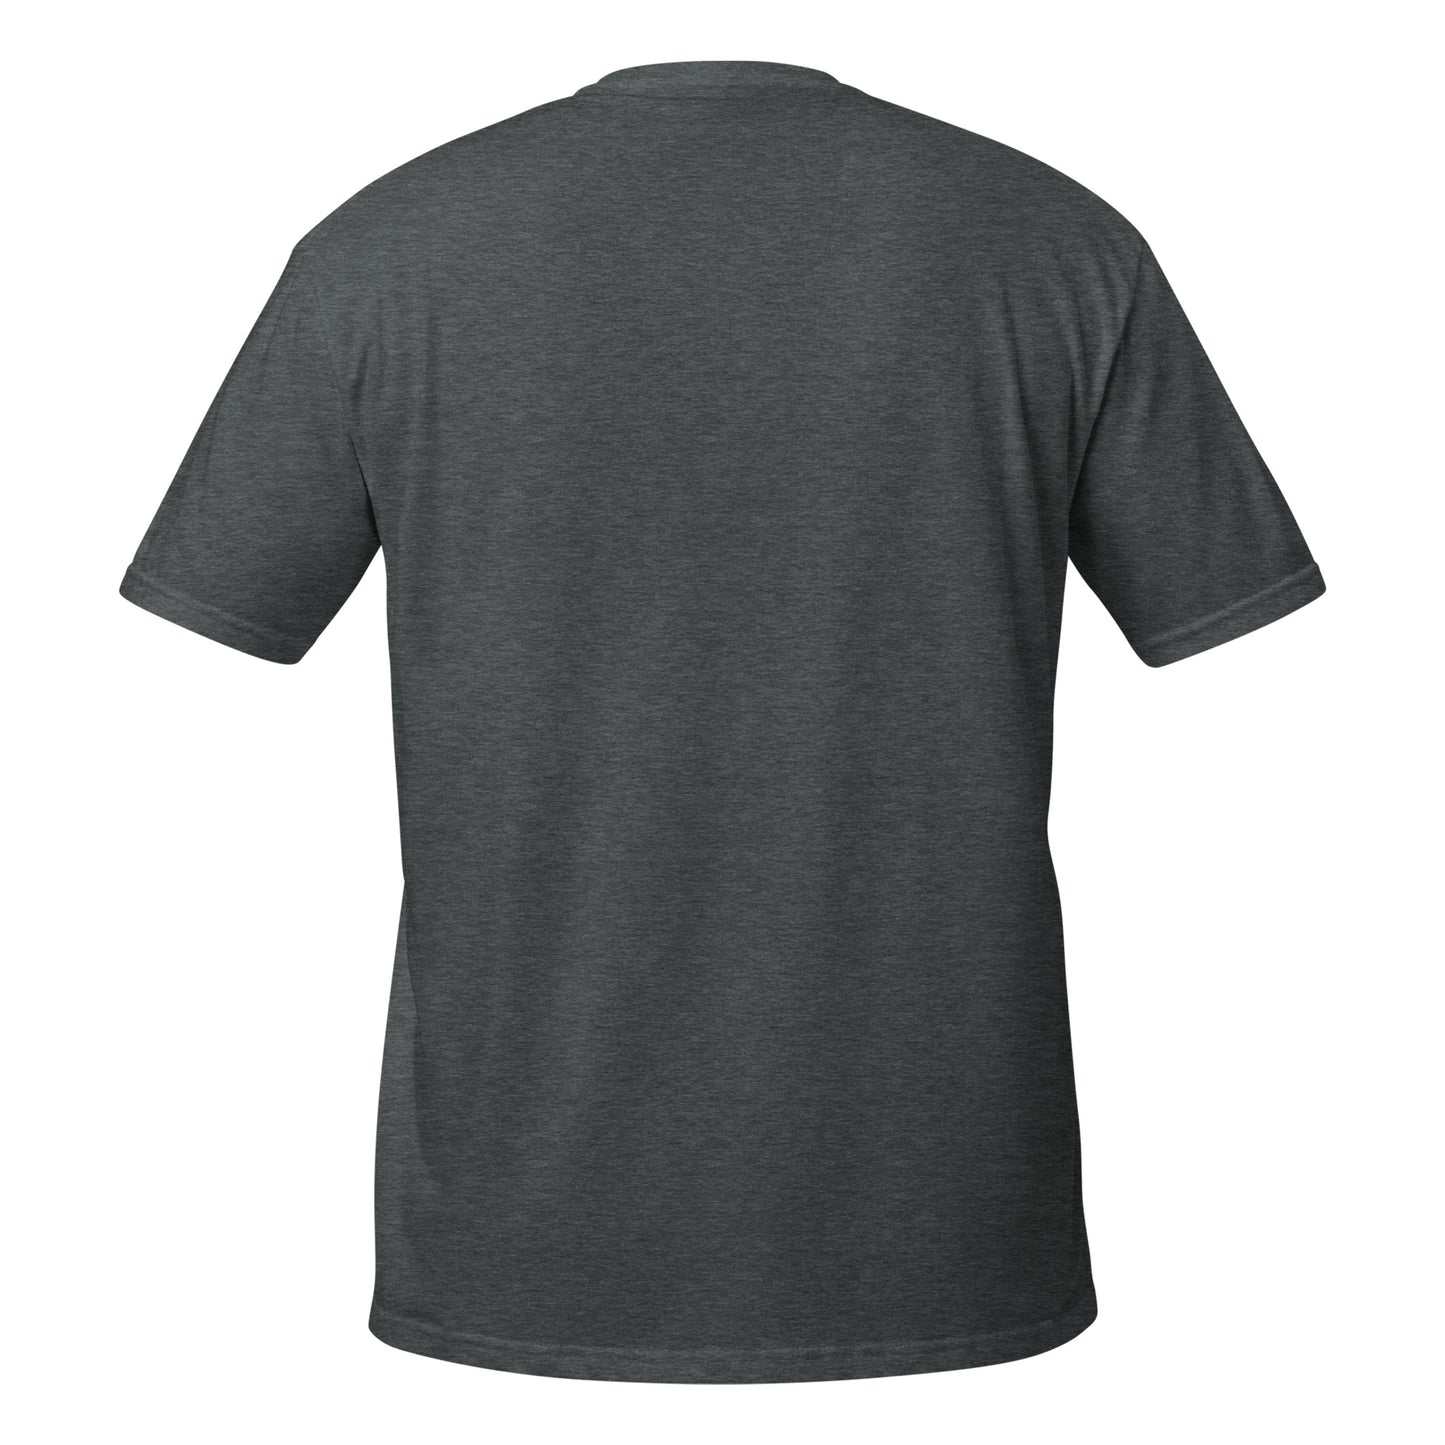 UNISEX Dark Heather SPARS Logomark Basic T-Shirt